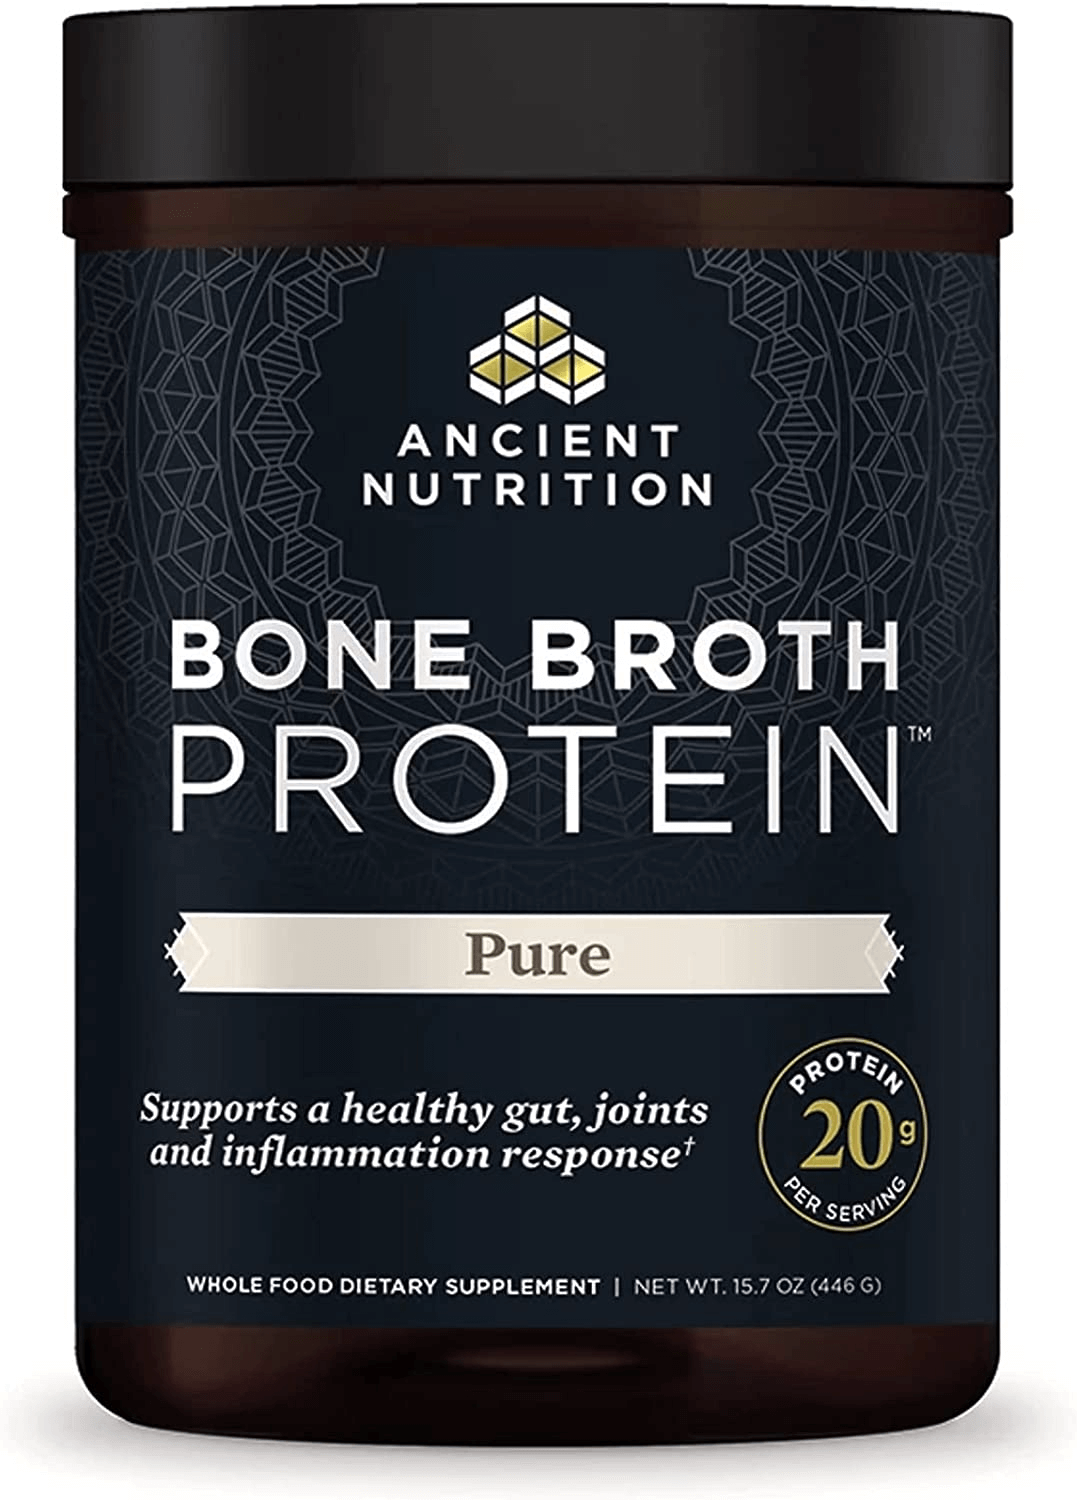 Ancient Nutrition bone broth